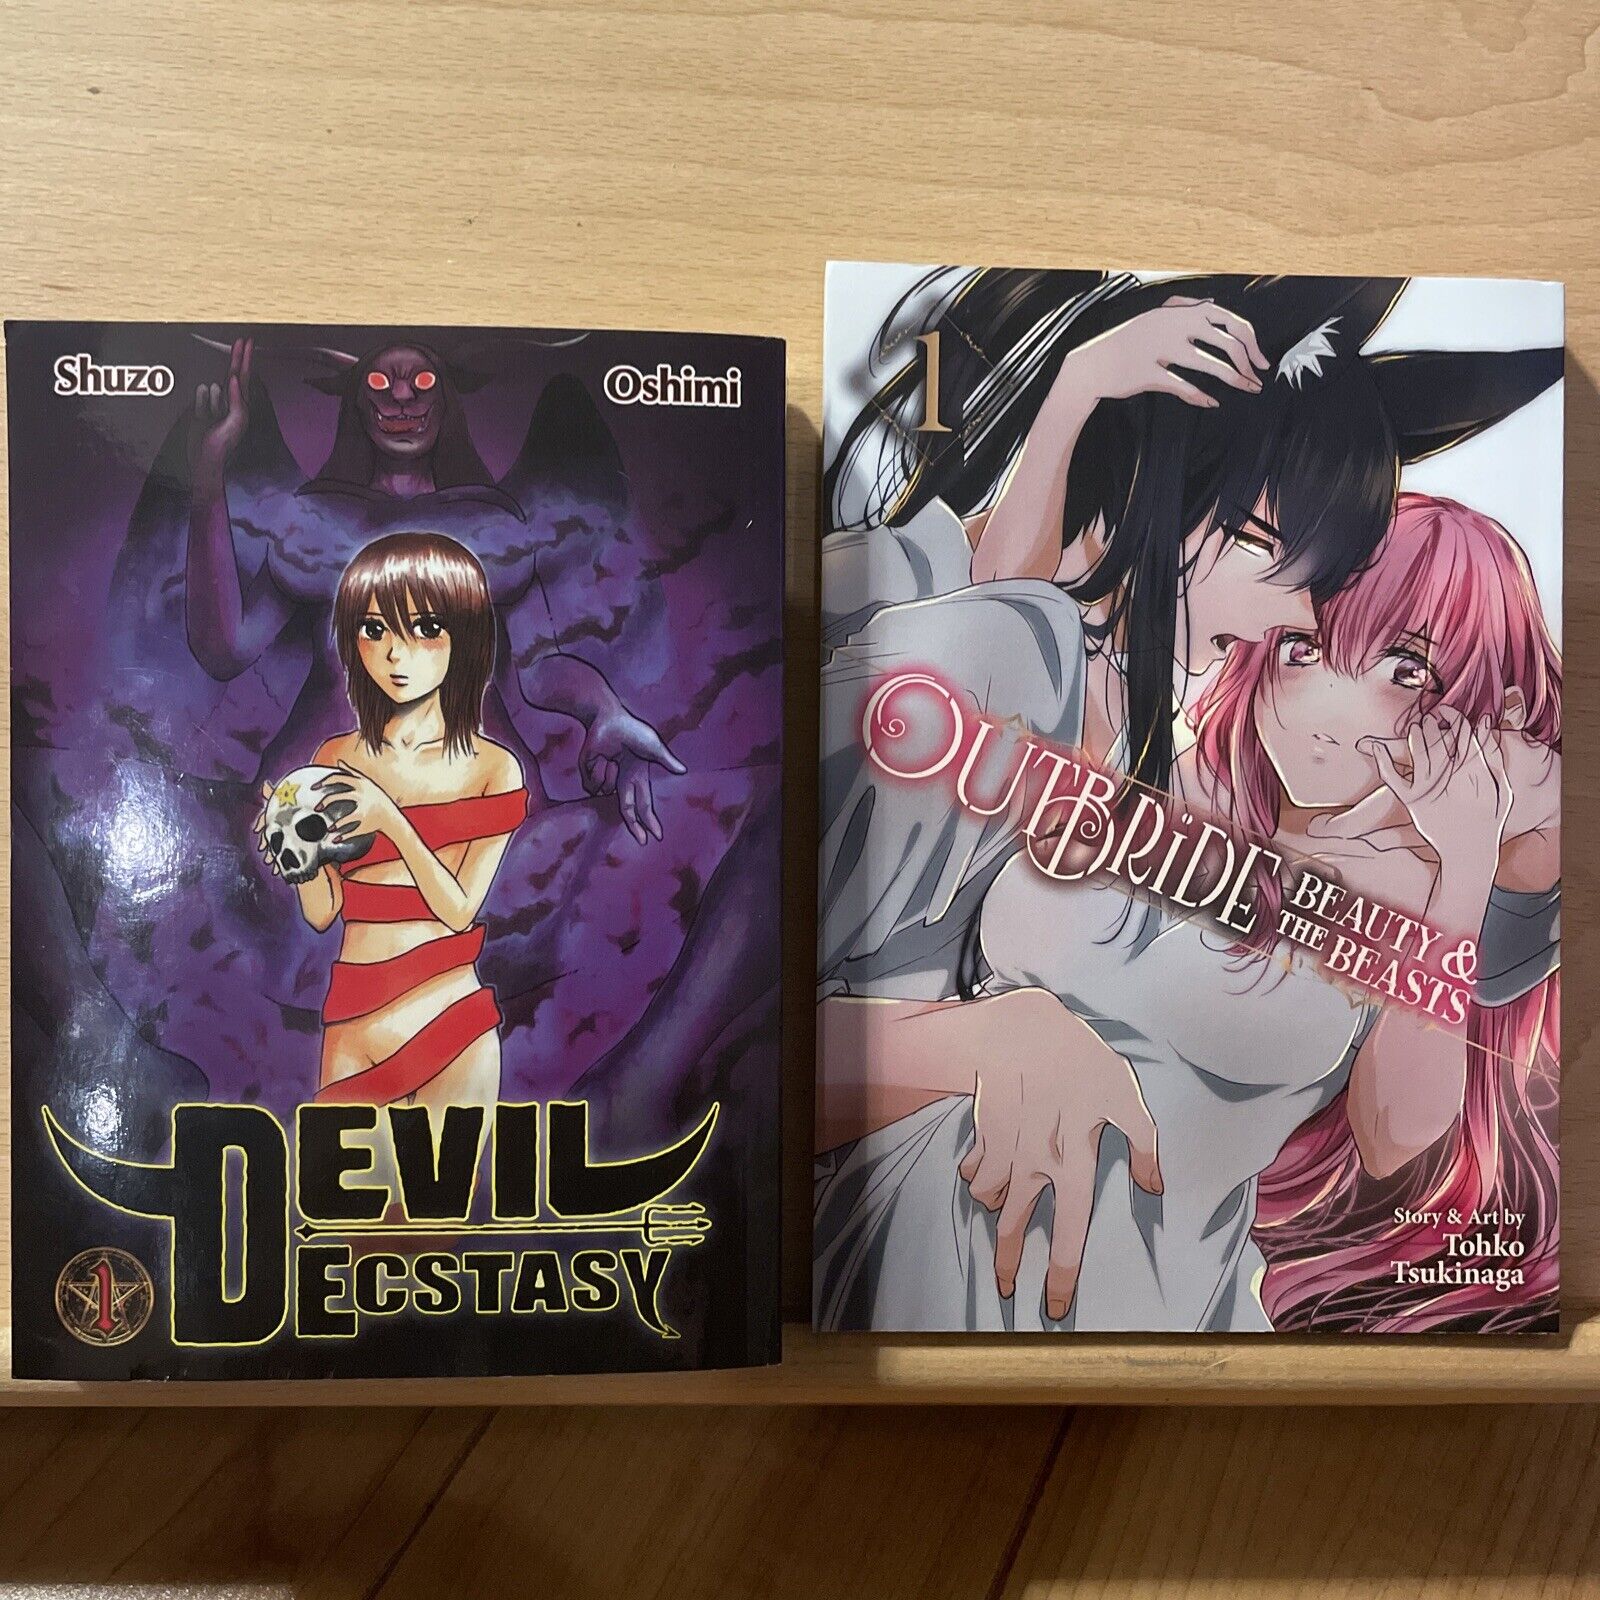 2 Erotic Manga: DEVIL ECSTASY 1 (Shuzo, Oshimi), OUTBRIDE BEAUTY & THE BEASTS 1